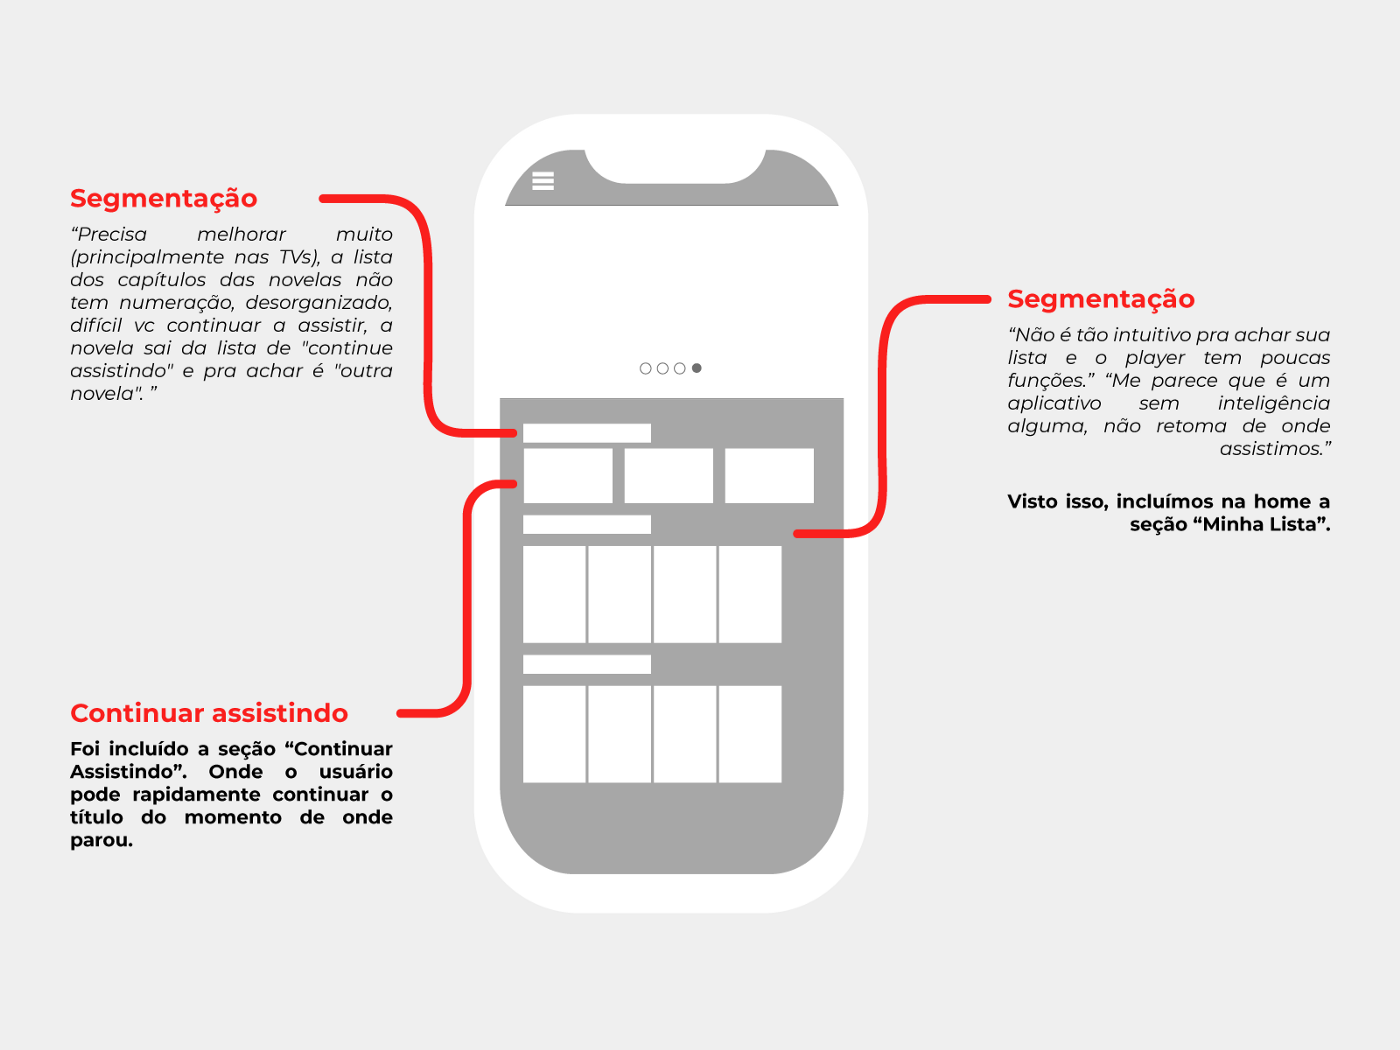 Redesign Globoplay: UX/UI Case. Projeto de redesign da plataforma de…, by  Caio Rabelo